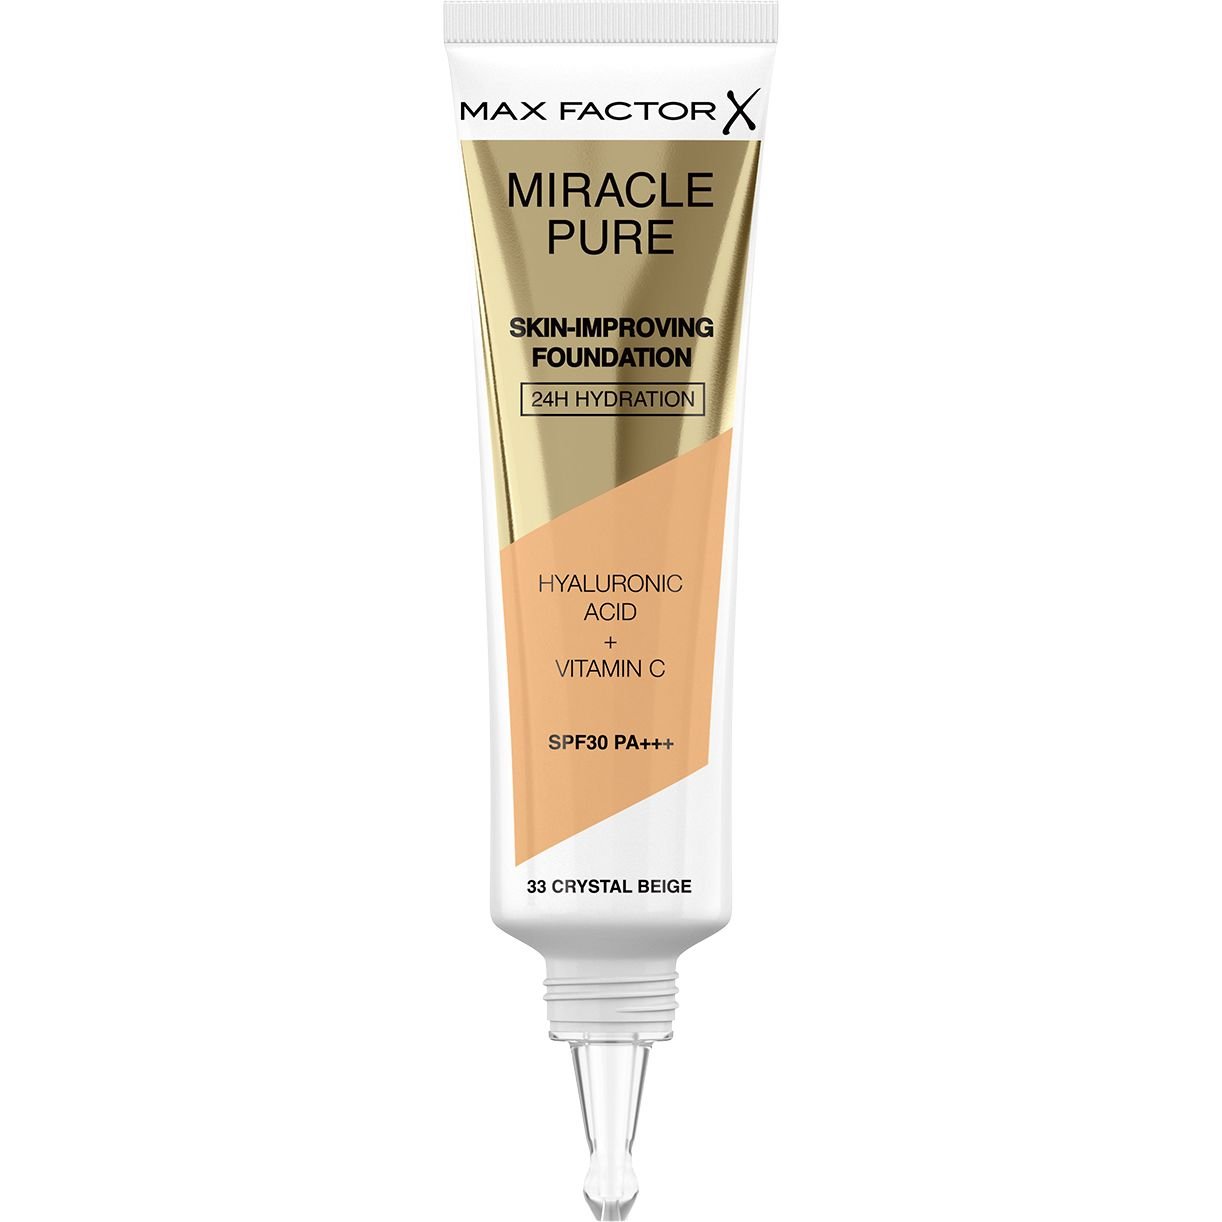 Тональная основа Max Factor Miracle Pure Skin-Improving Foundation SPF30 тон 033 (Crystal Beige) 30 мл - фото 2